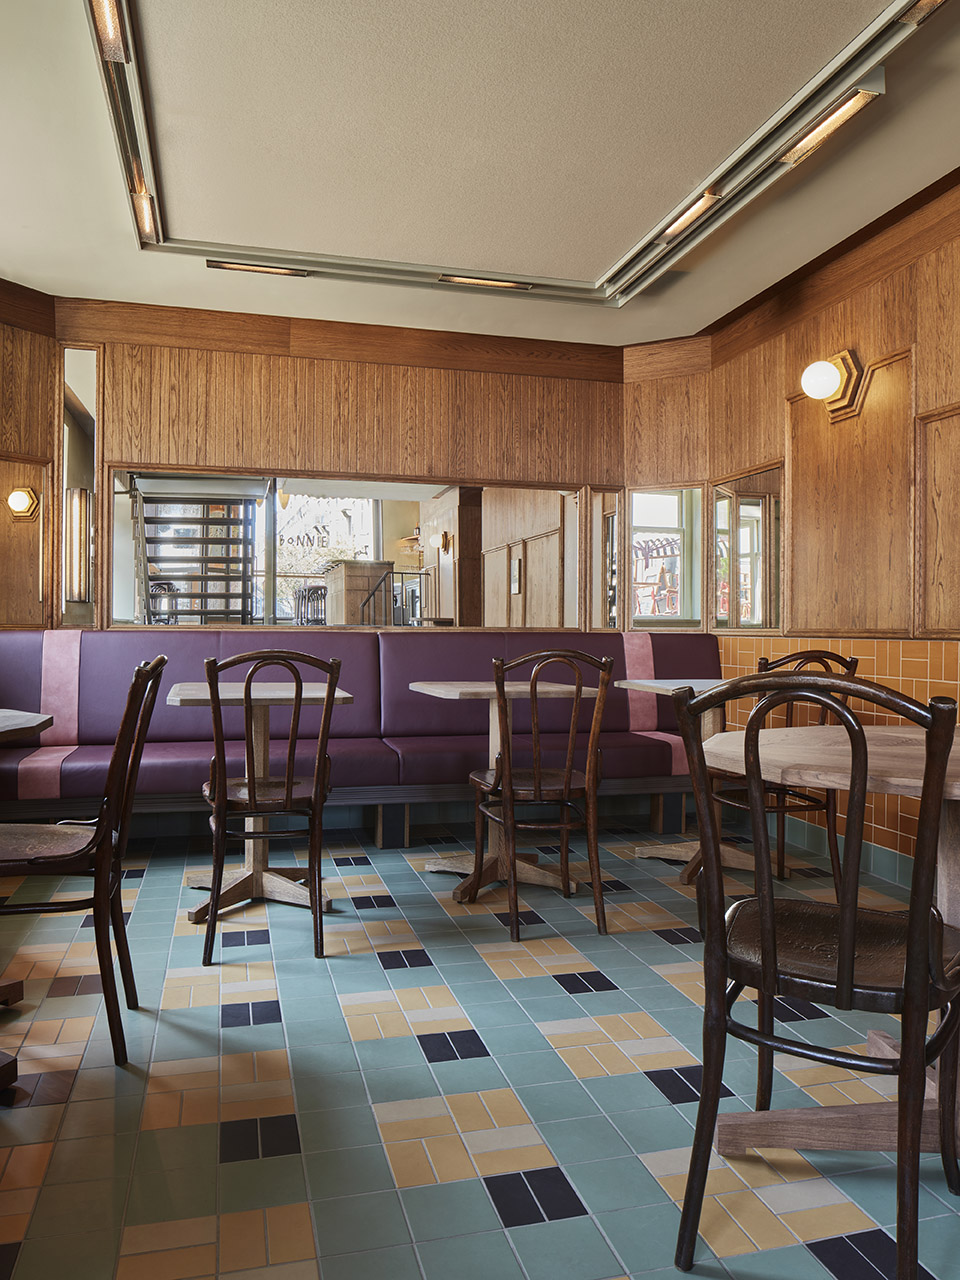 Bonnie酒吧，阿姆斯特丹/在旧式风格和温暖的亲切感之间取得完美平衡-19